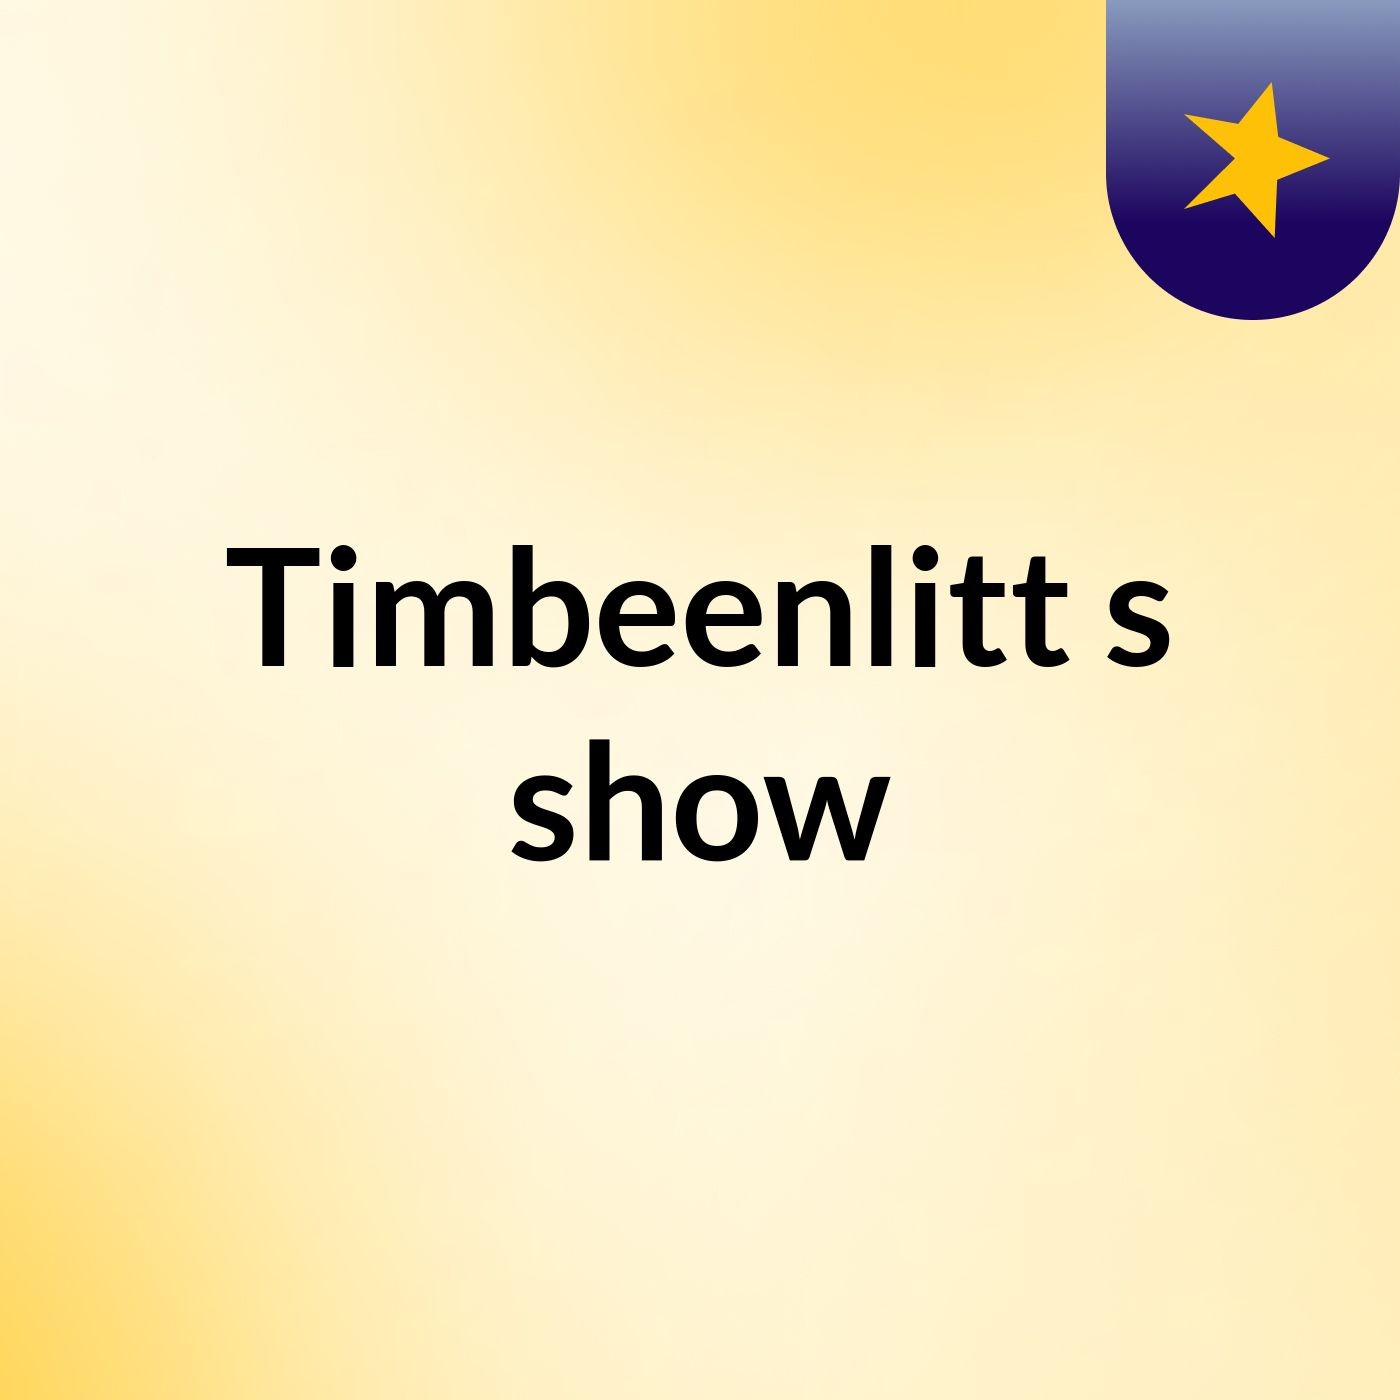 Timbeenlitt's show